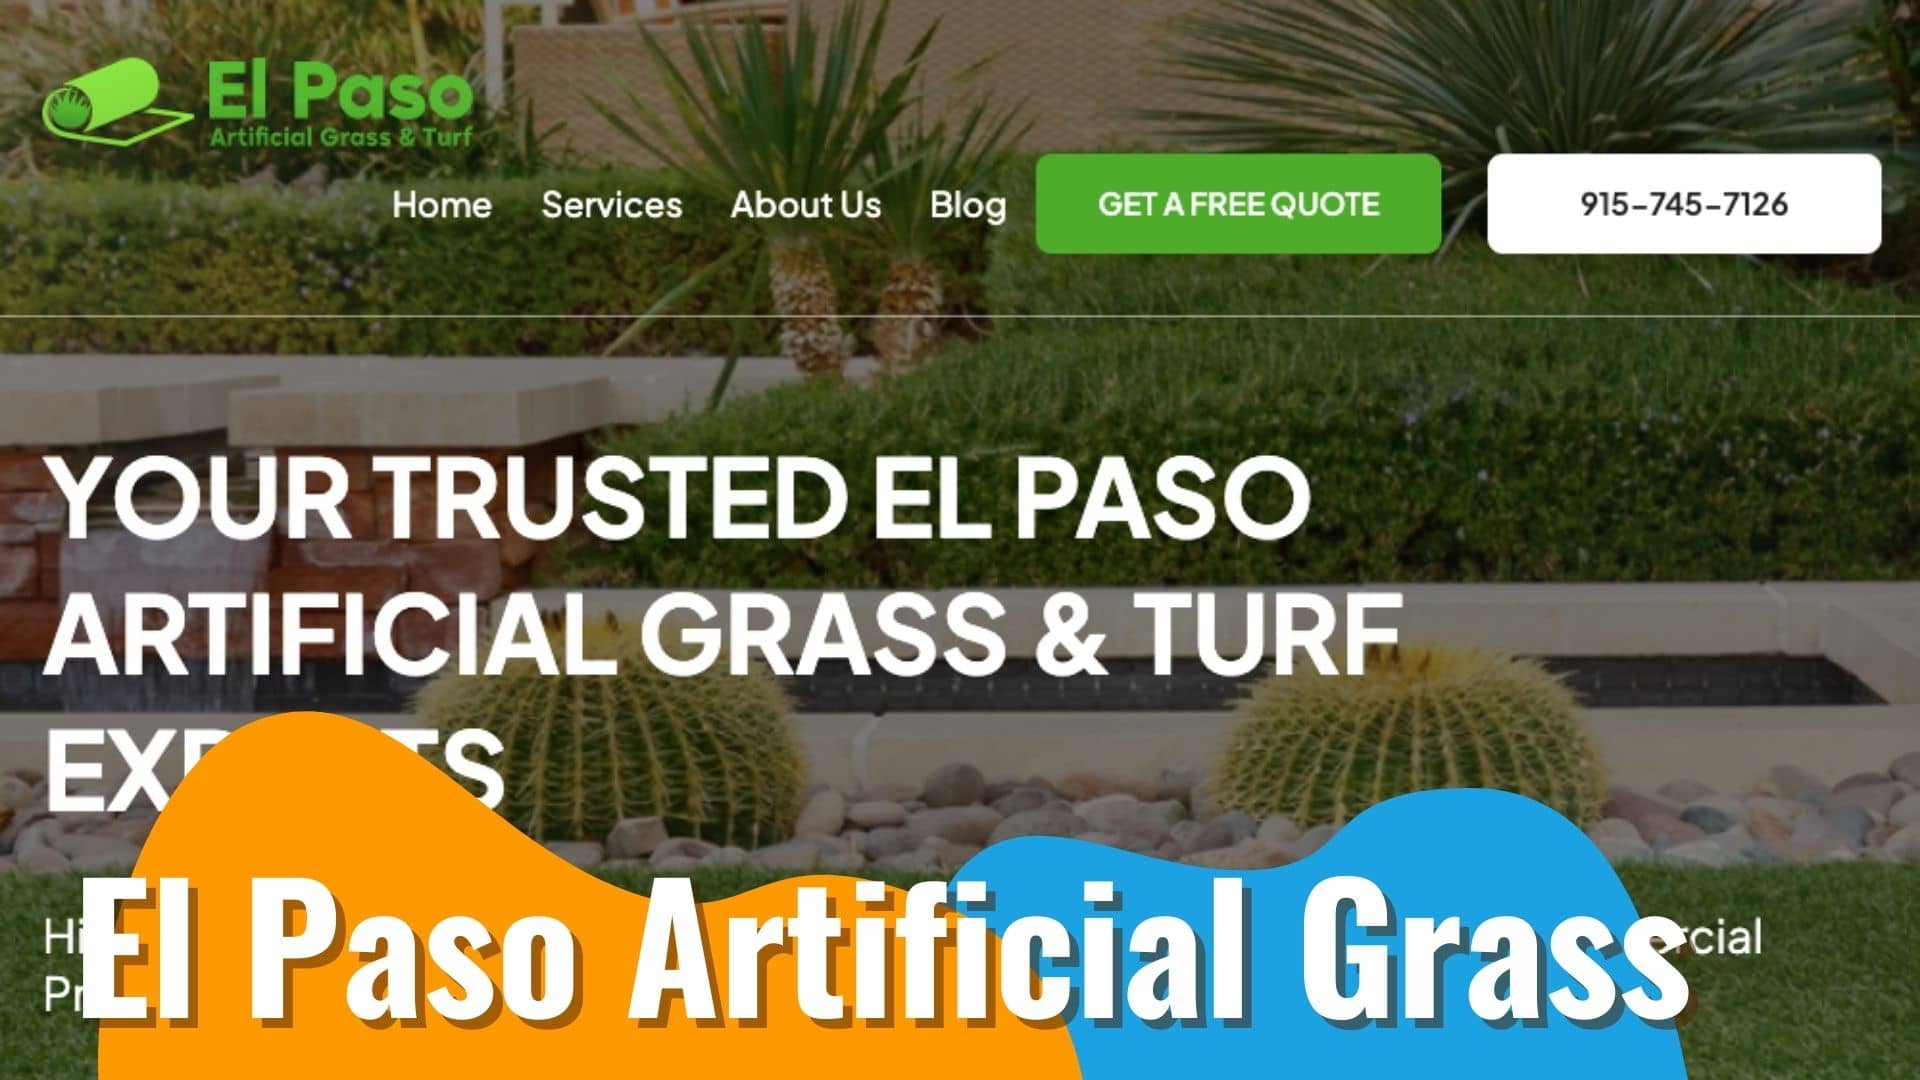 El Paso Artificial Grass and Turf